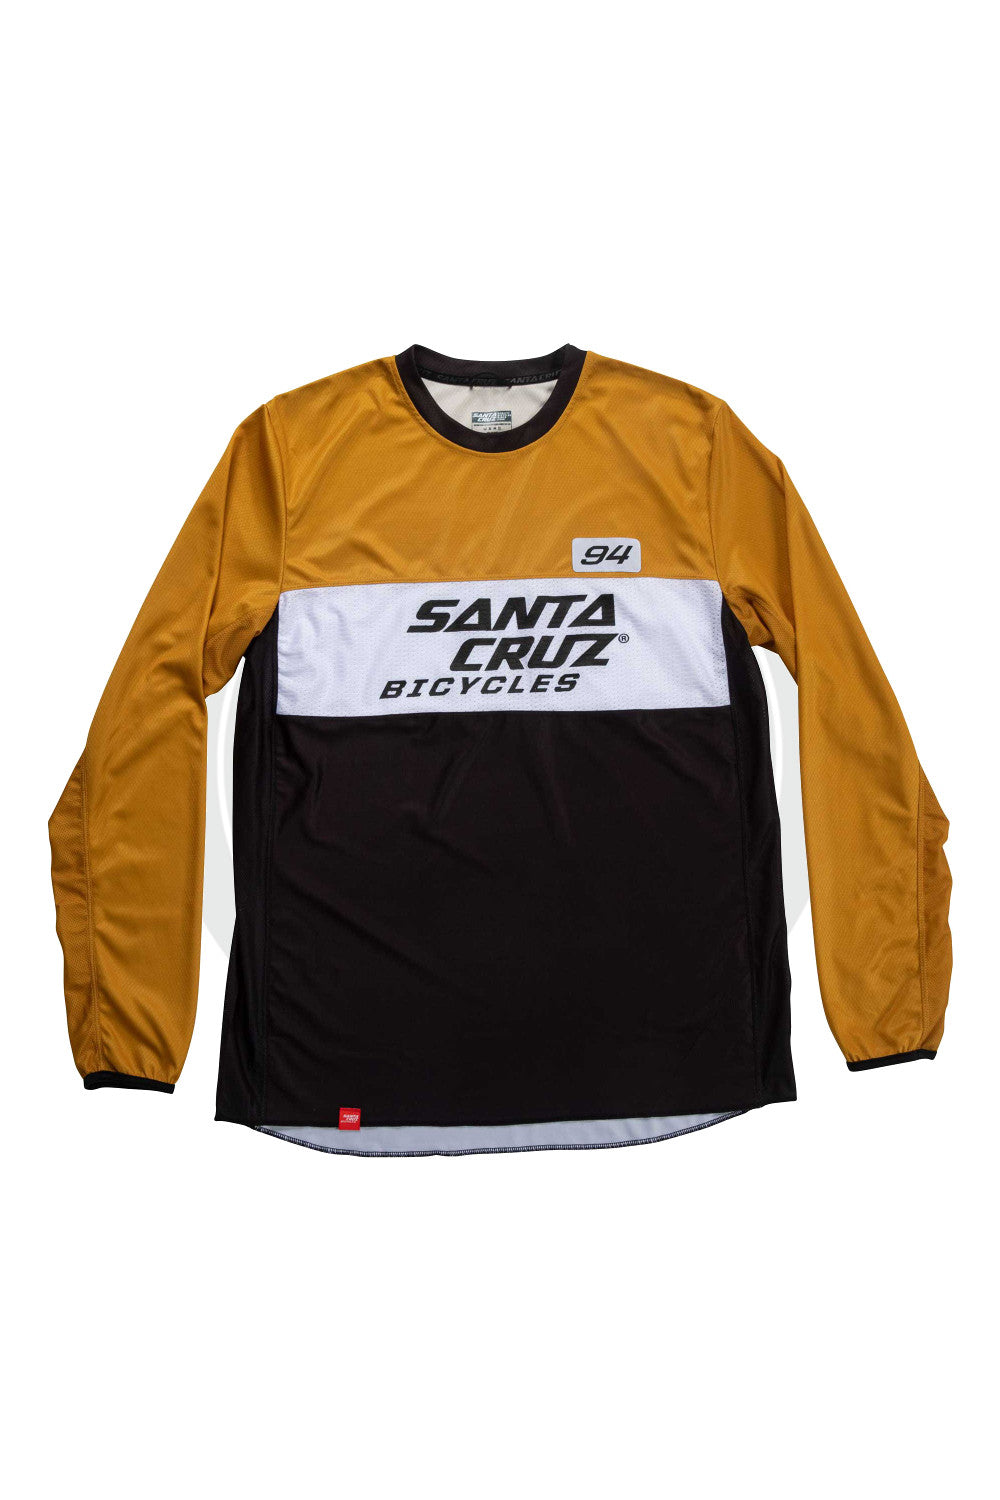 Santa Cruz 2020 Enduro Bike Jerseys Motocross Bmx Racing Jersey Downhill Mountain Dh Long Sleeve Cycling Clothes Mtb Mx T Shirt Cycling Jerseys Aliexpress